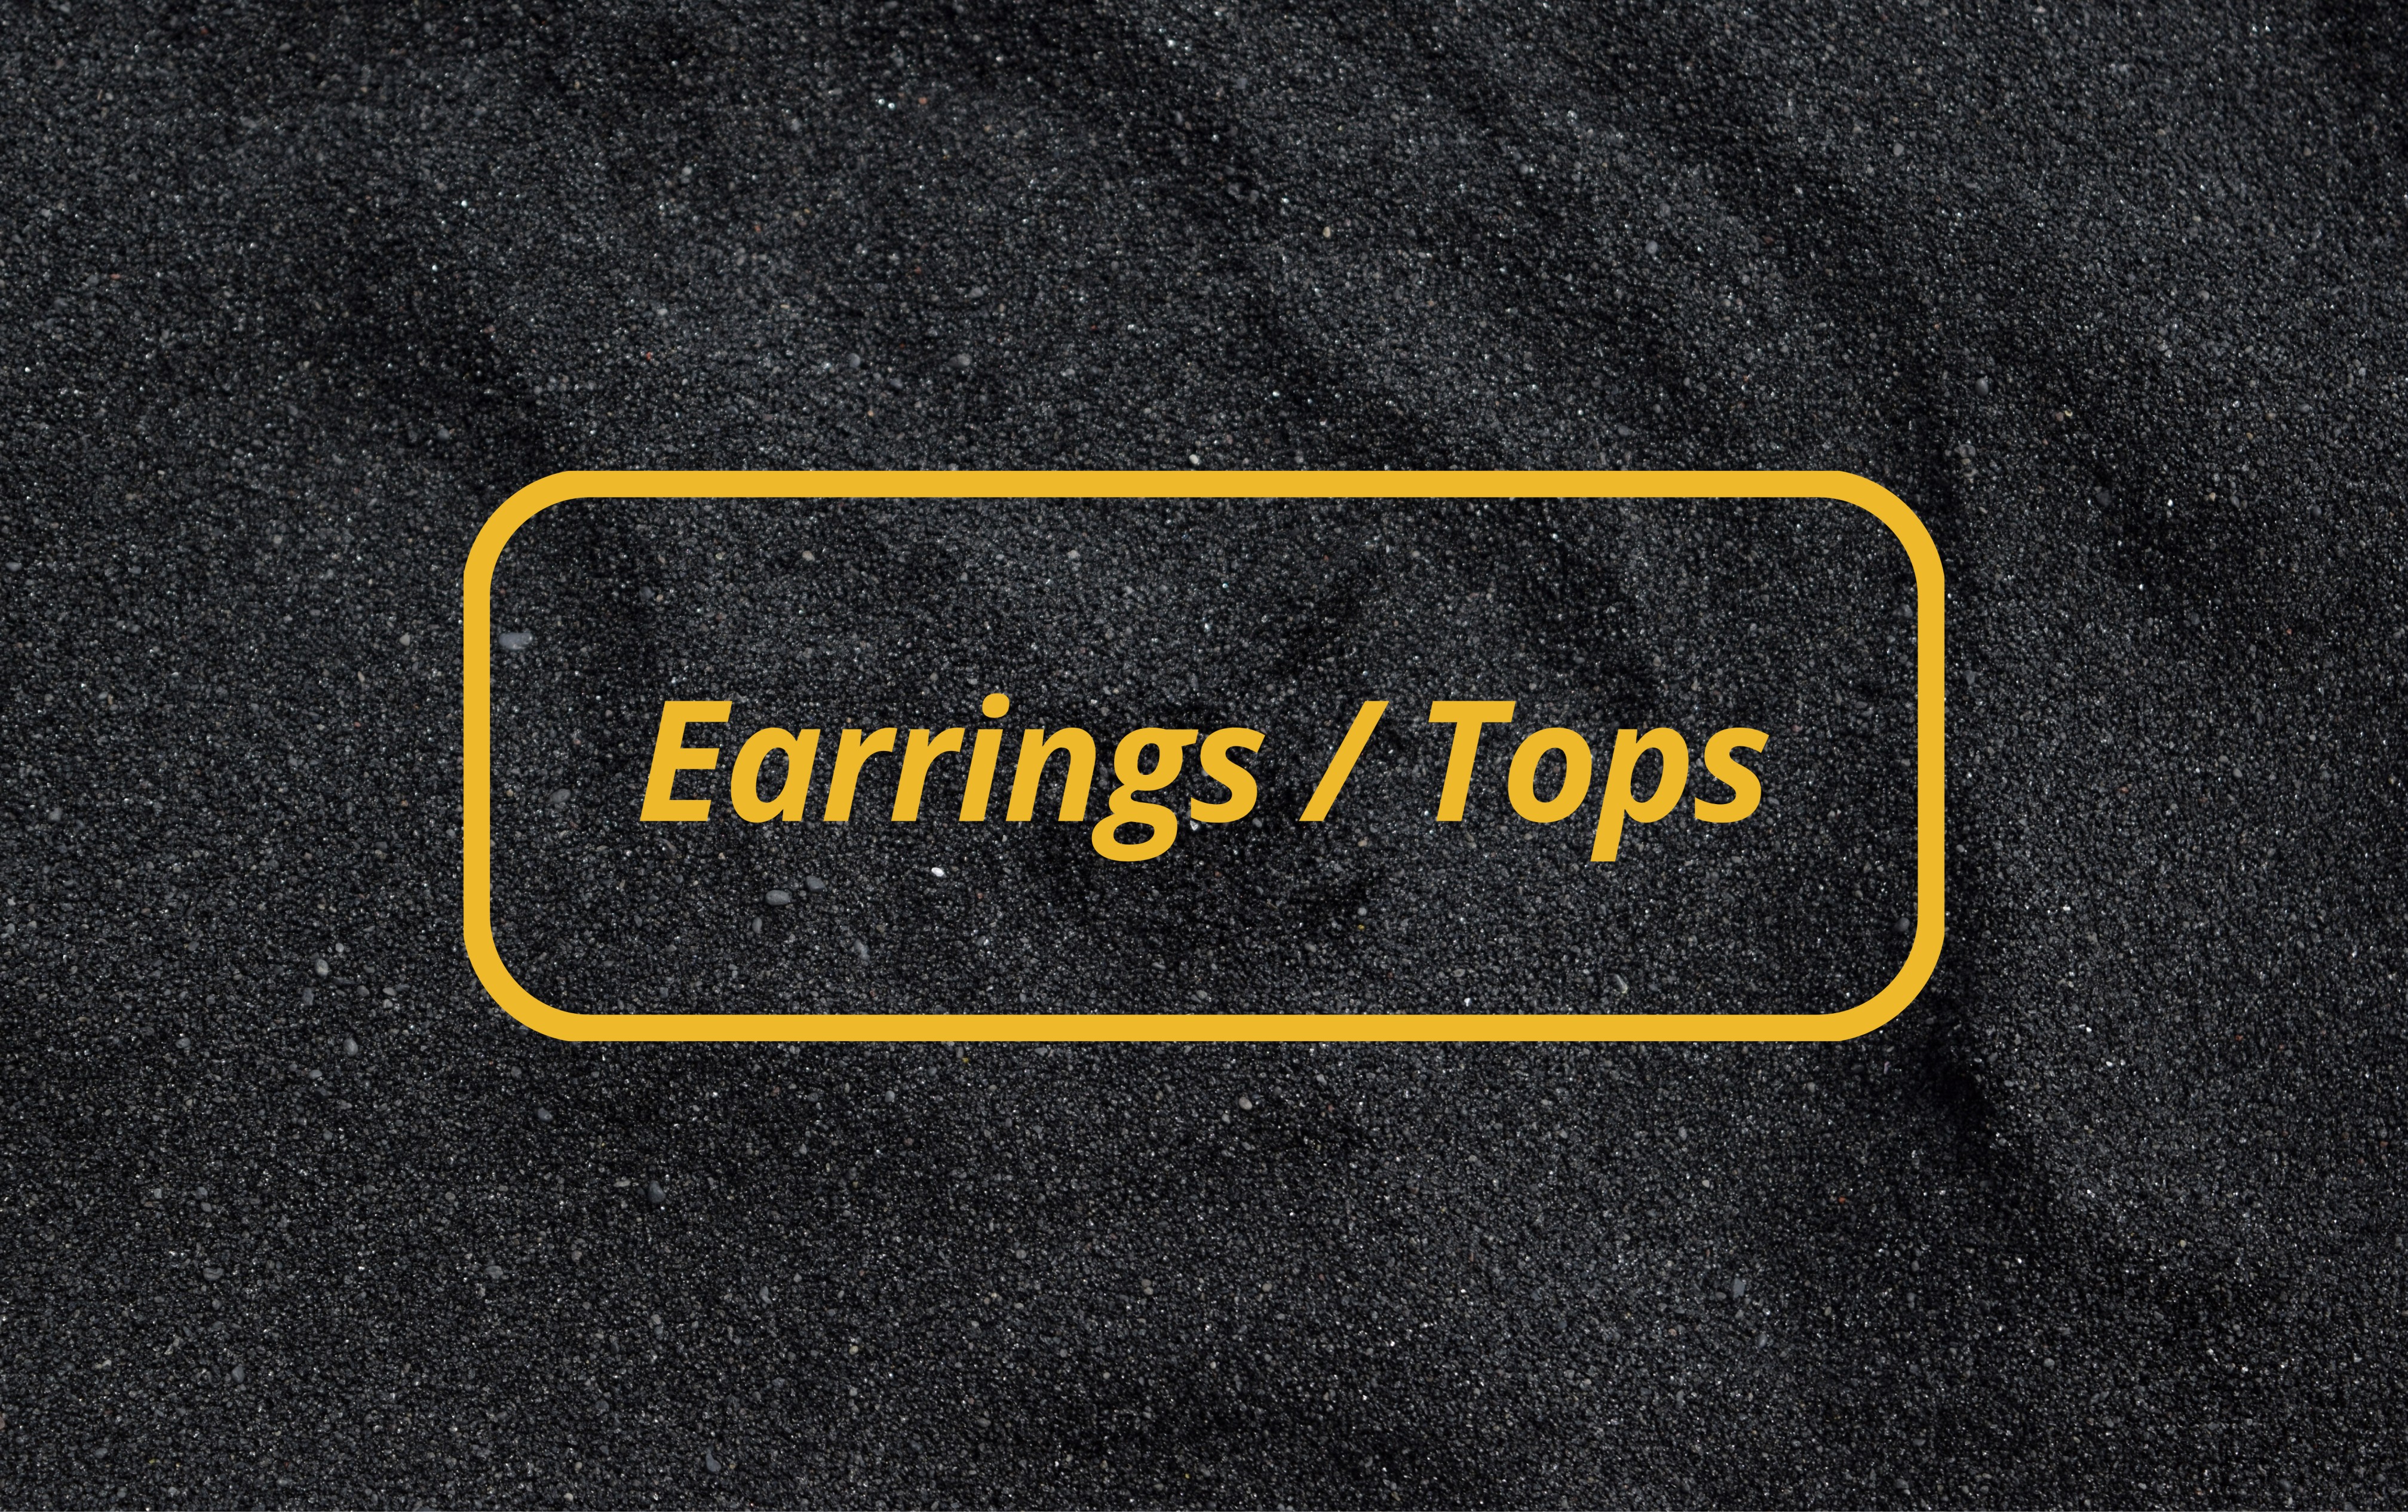 Earrings/Tops